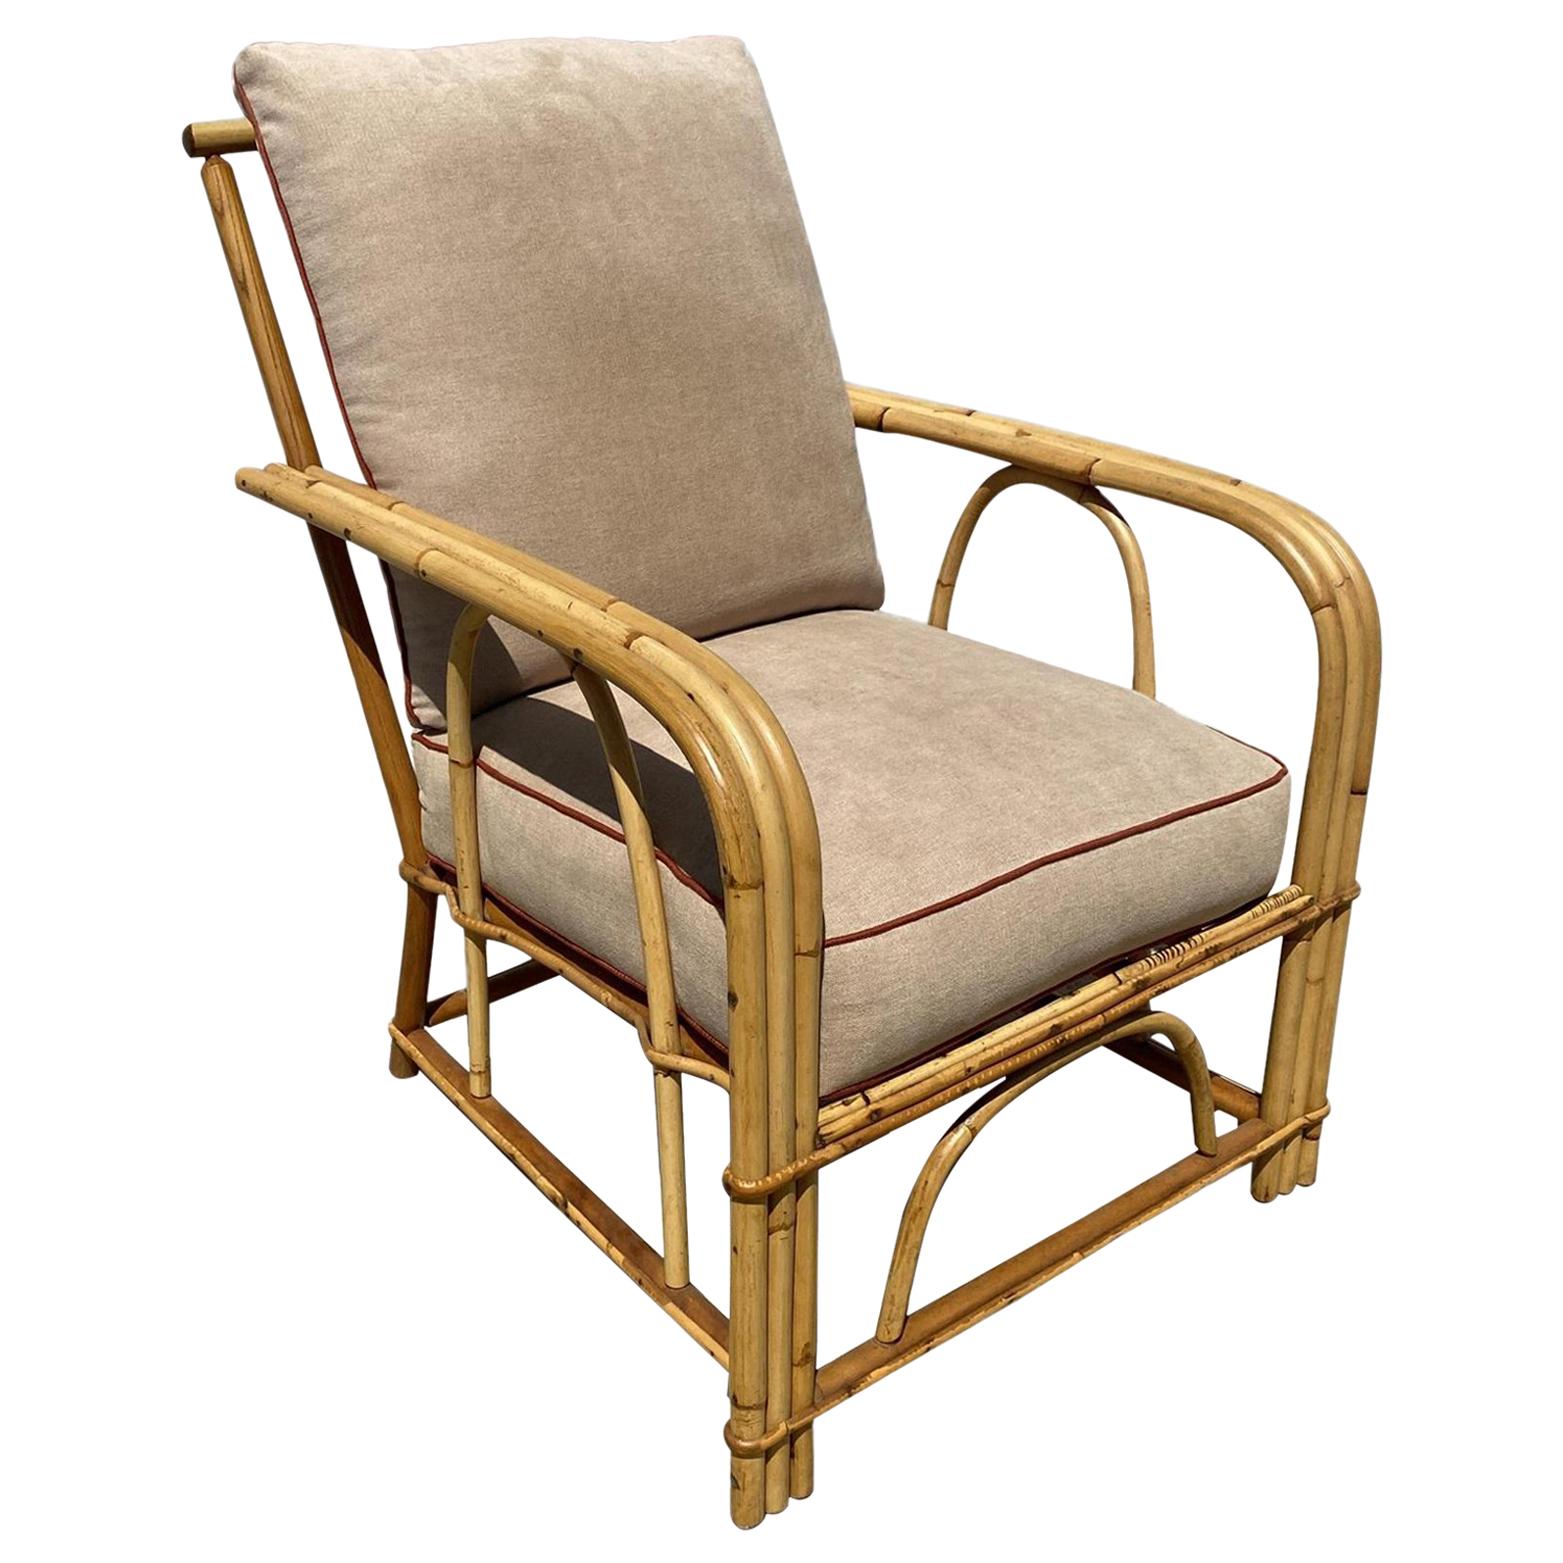 Rare "1949er" Rattan 3-Strand Lounge Chair by Heywood Wakefield